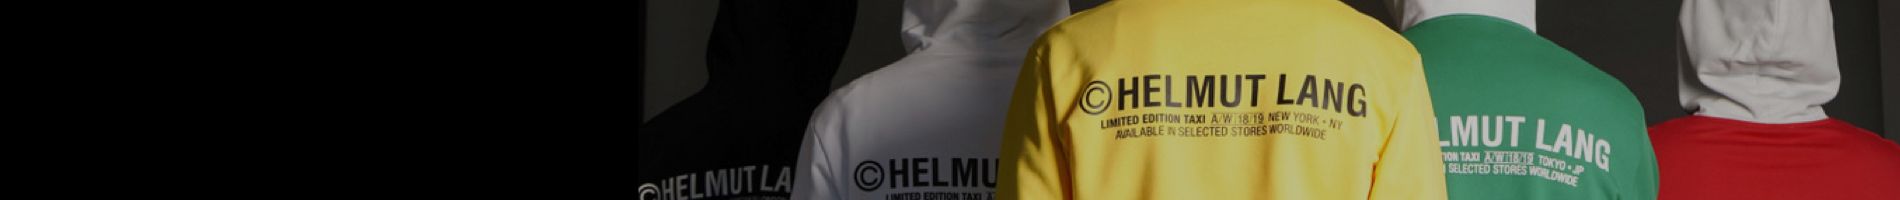 Helmut Lang Men's Footwear Banner